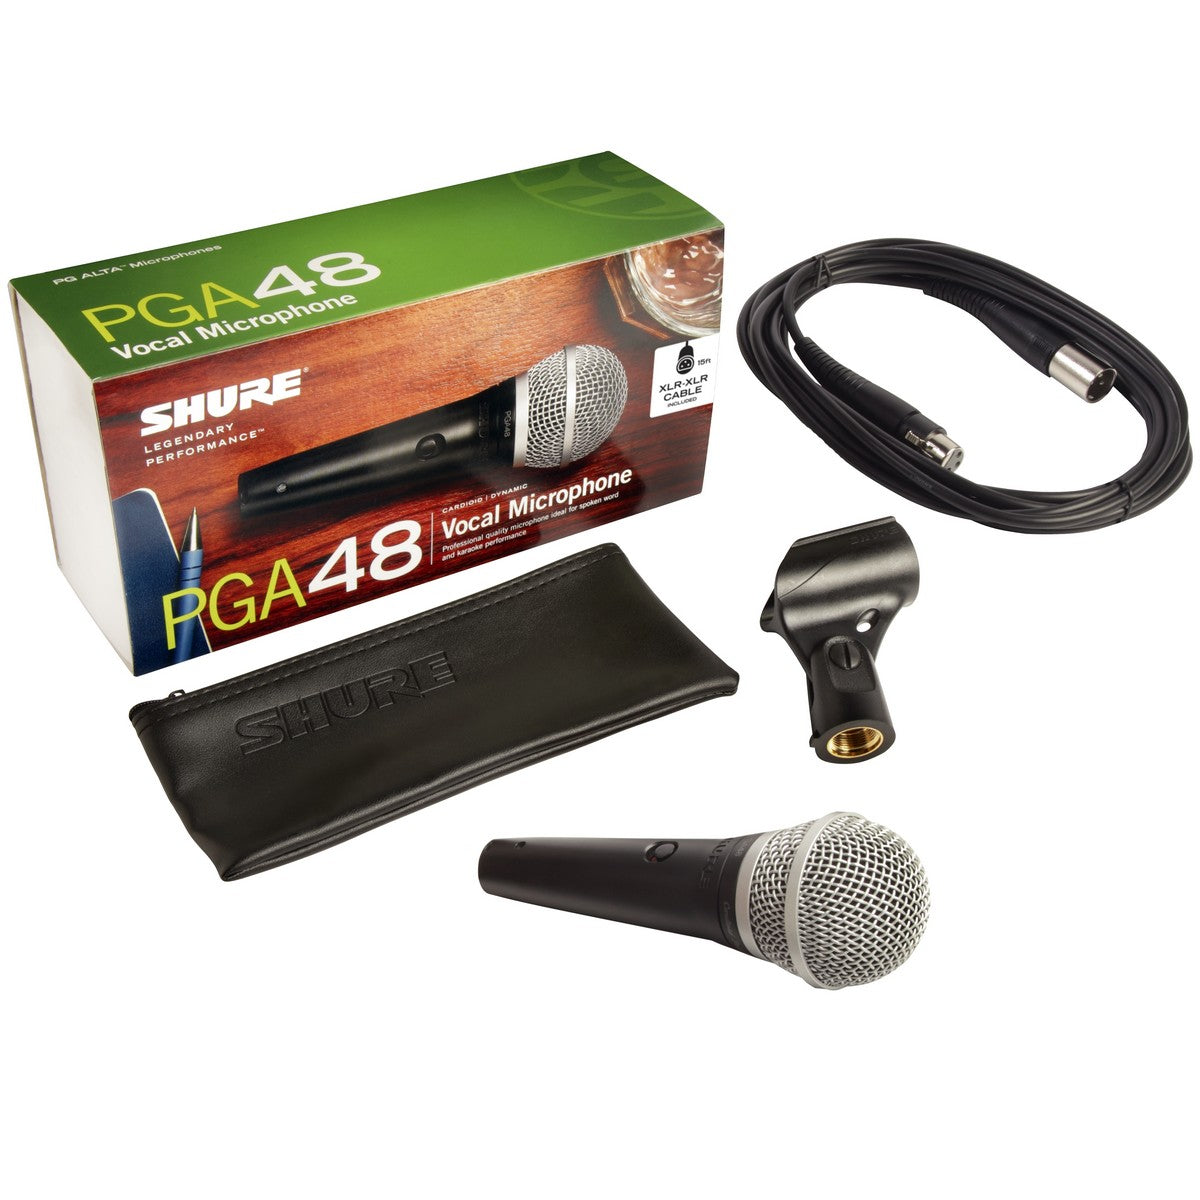 Shure PGA48-XLR | Cardioid Dynamic Vocal Microphone XLR-XLR Cable